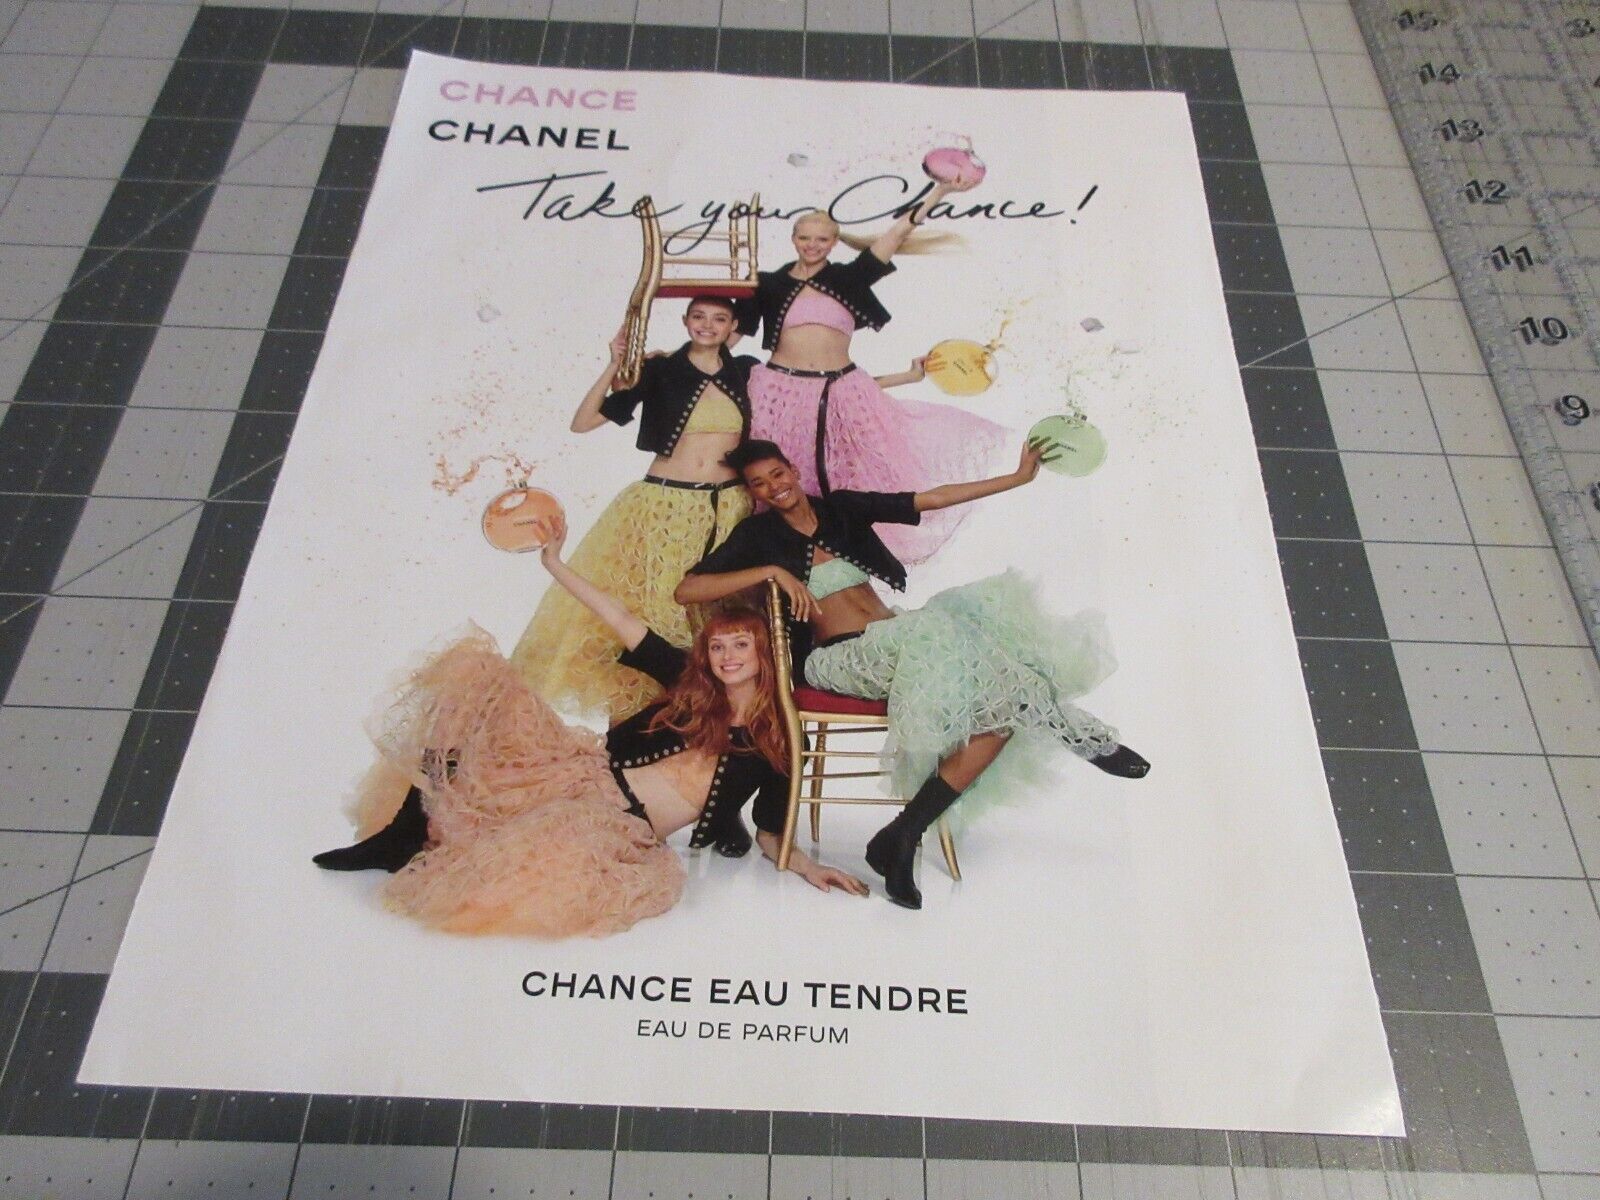 2019 Chance Chanel Eau Tendre, Print Ad Take your Chance